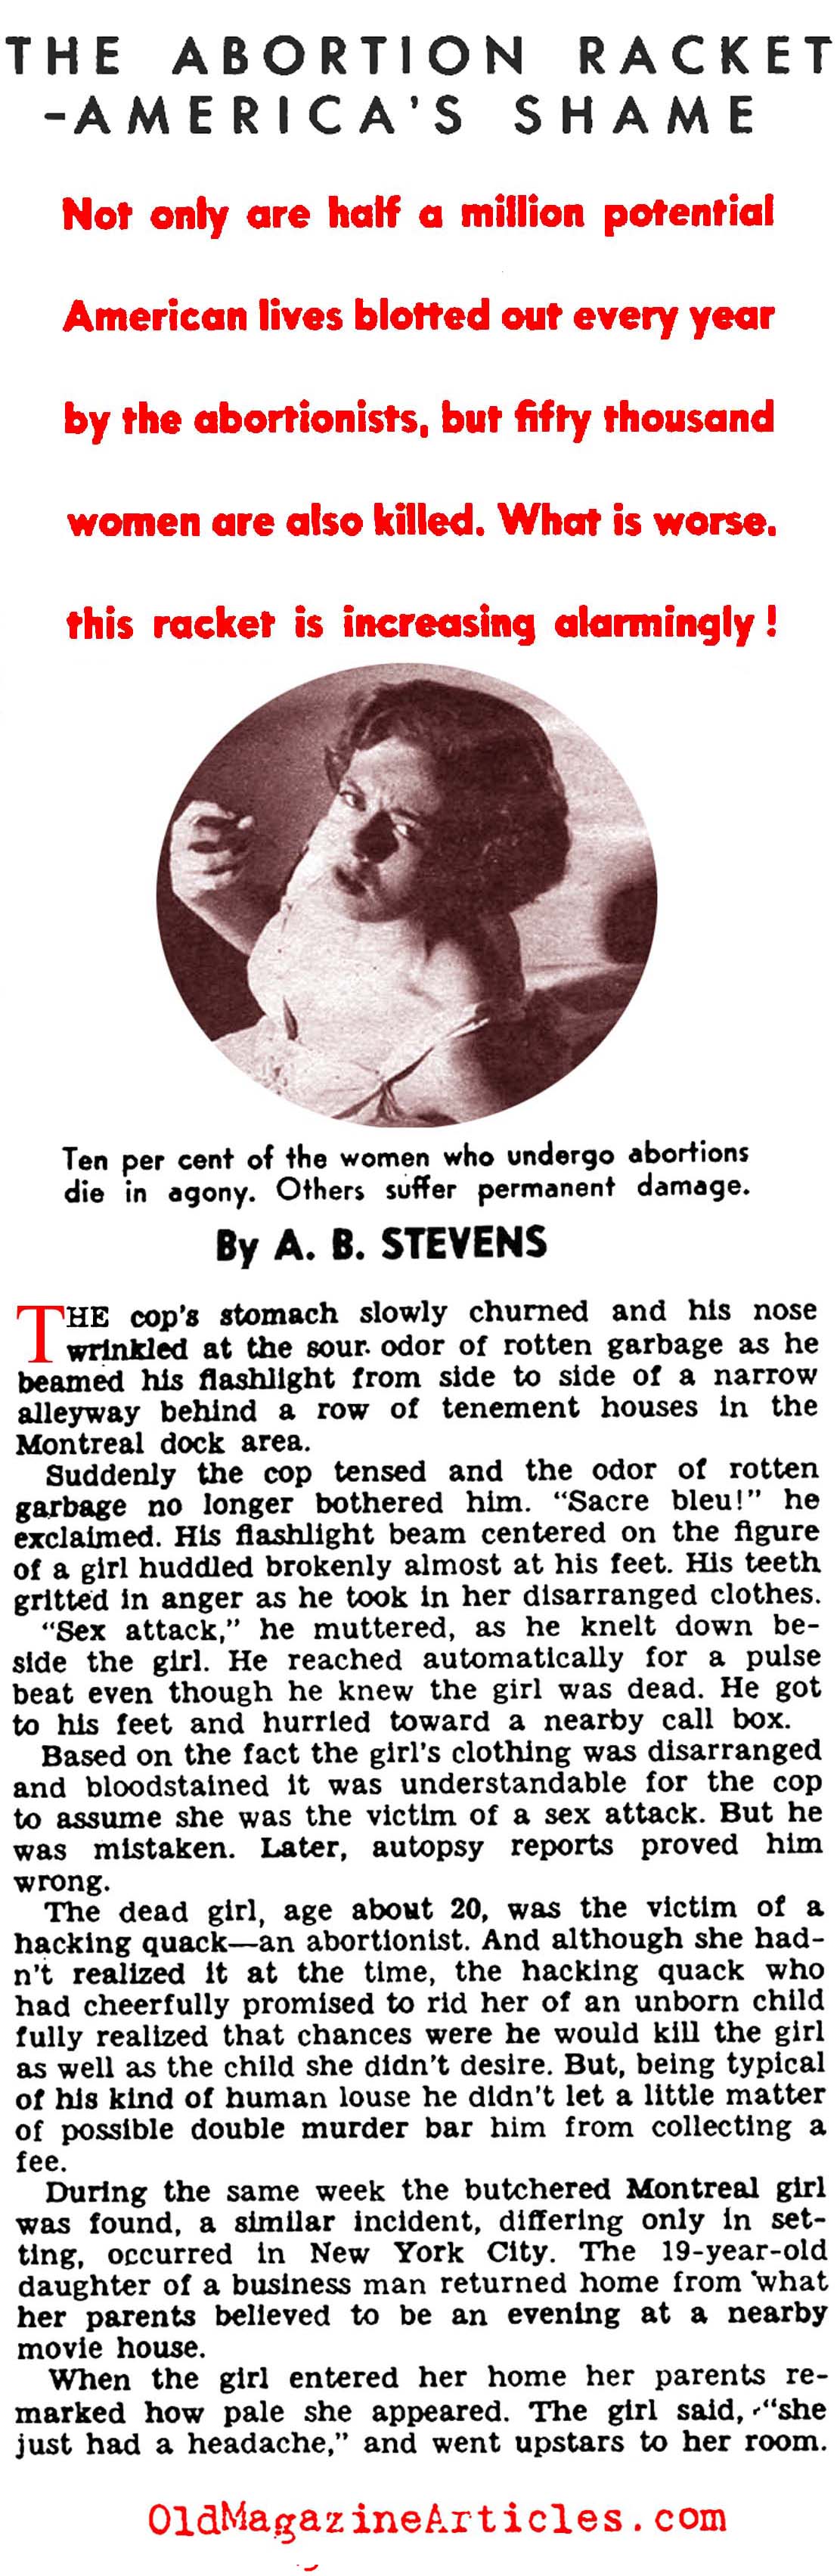 The Abortion Racket (Sir! Magazine, 1954)